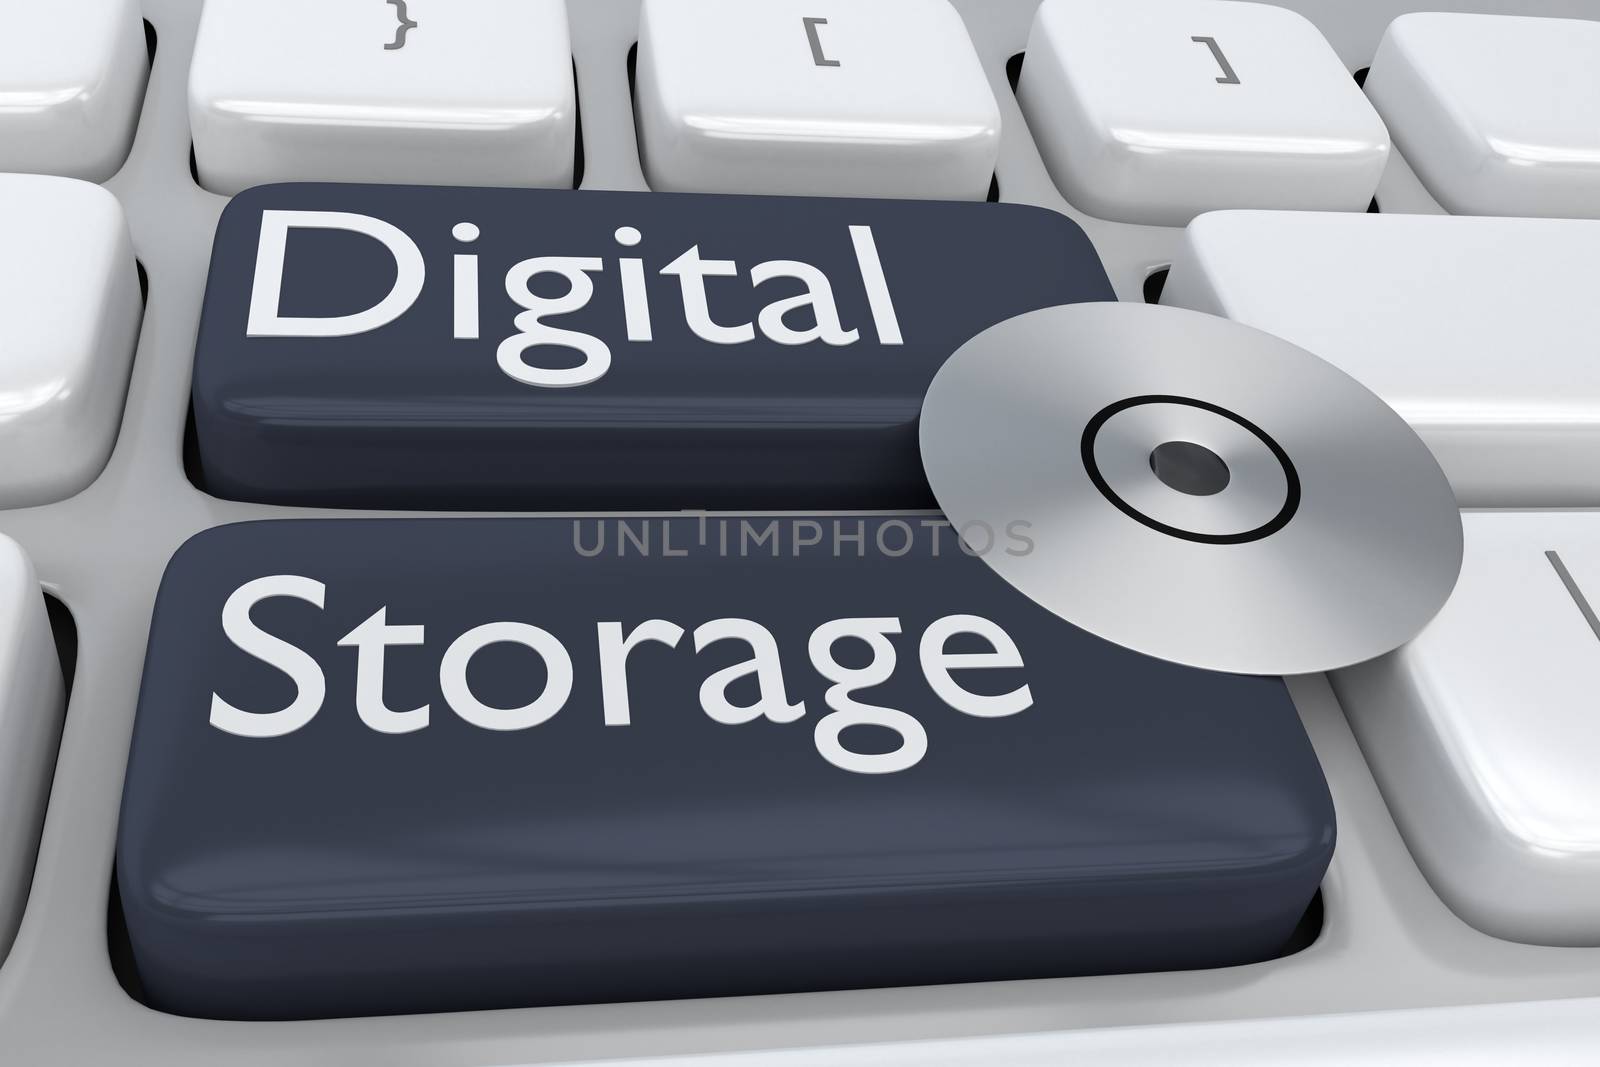 Digital Storage concept by HD_premium_shots